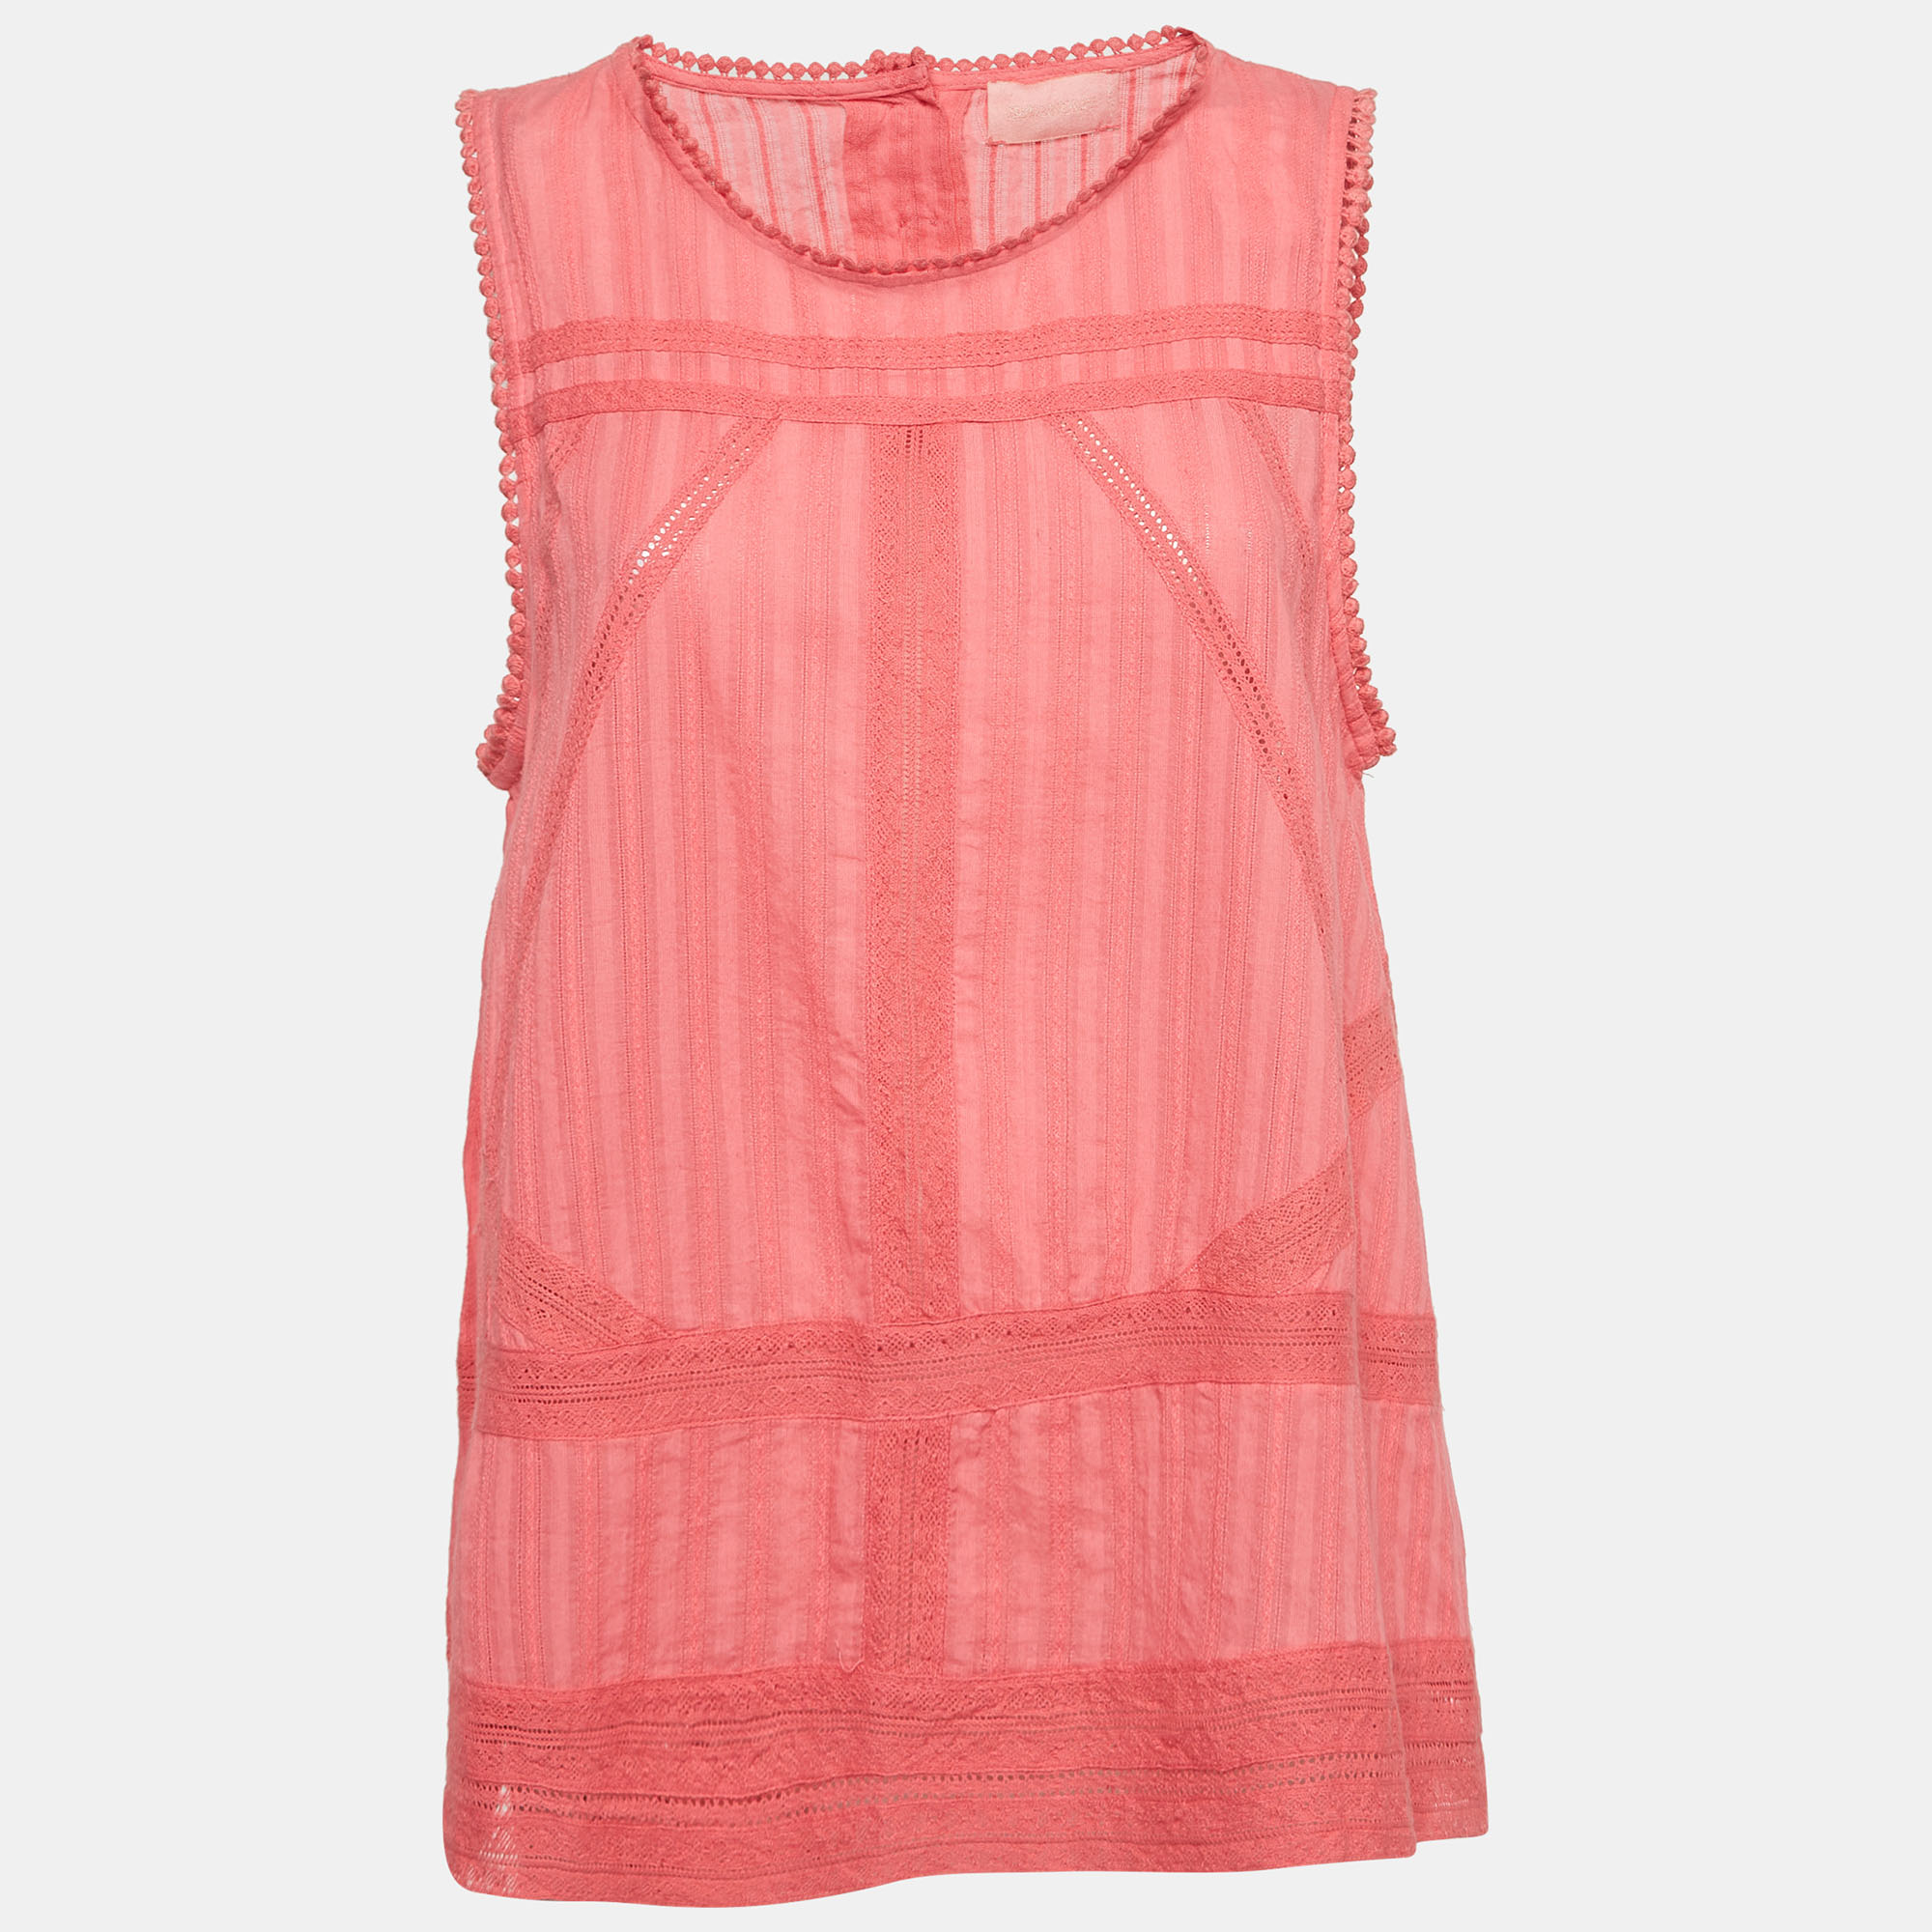 Zadig & voltaire pink lace trim cotton sleeveless blouse l